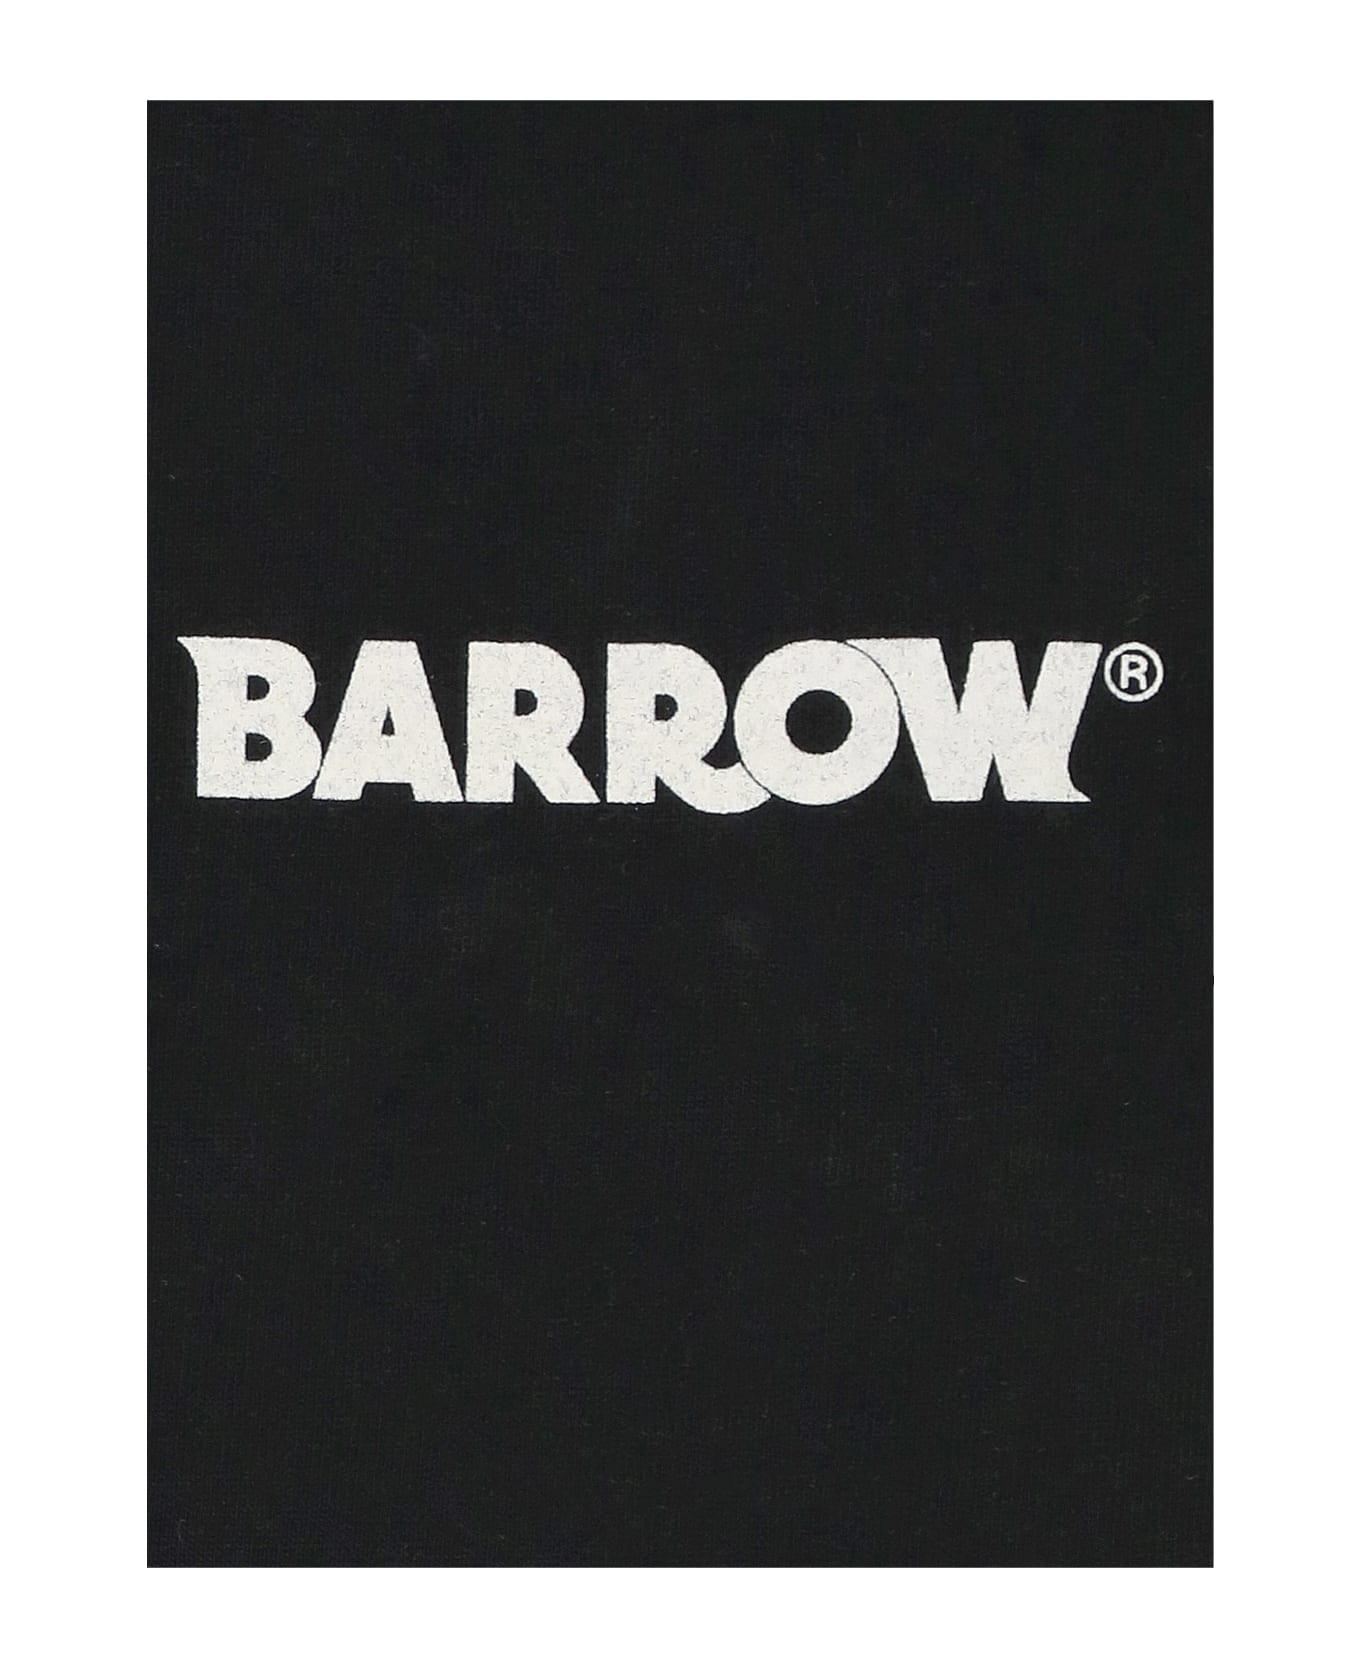 Barrow Logoed T-shirt - Black Tシャツ＆ポロシャツ